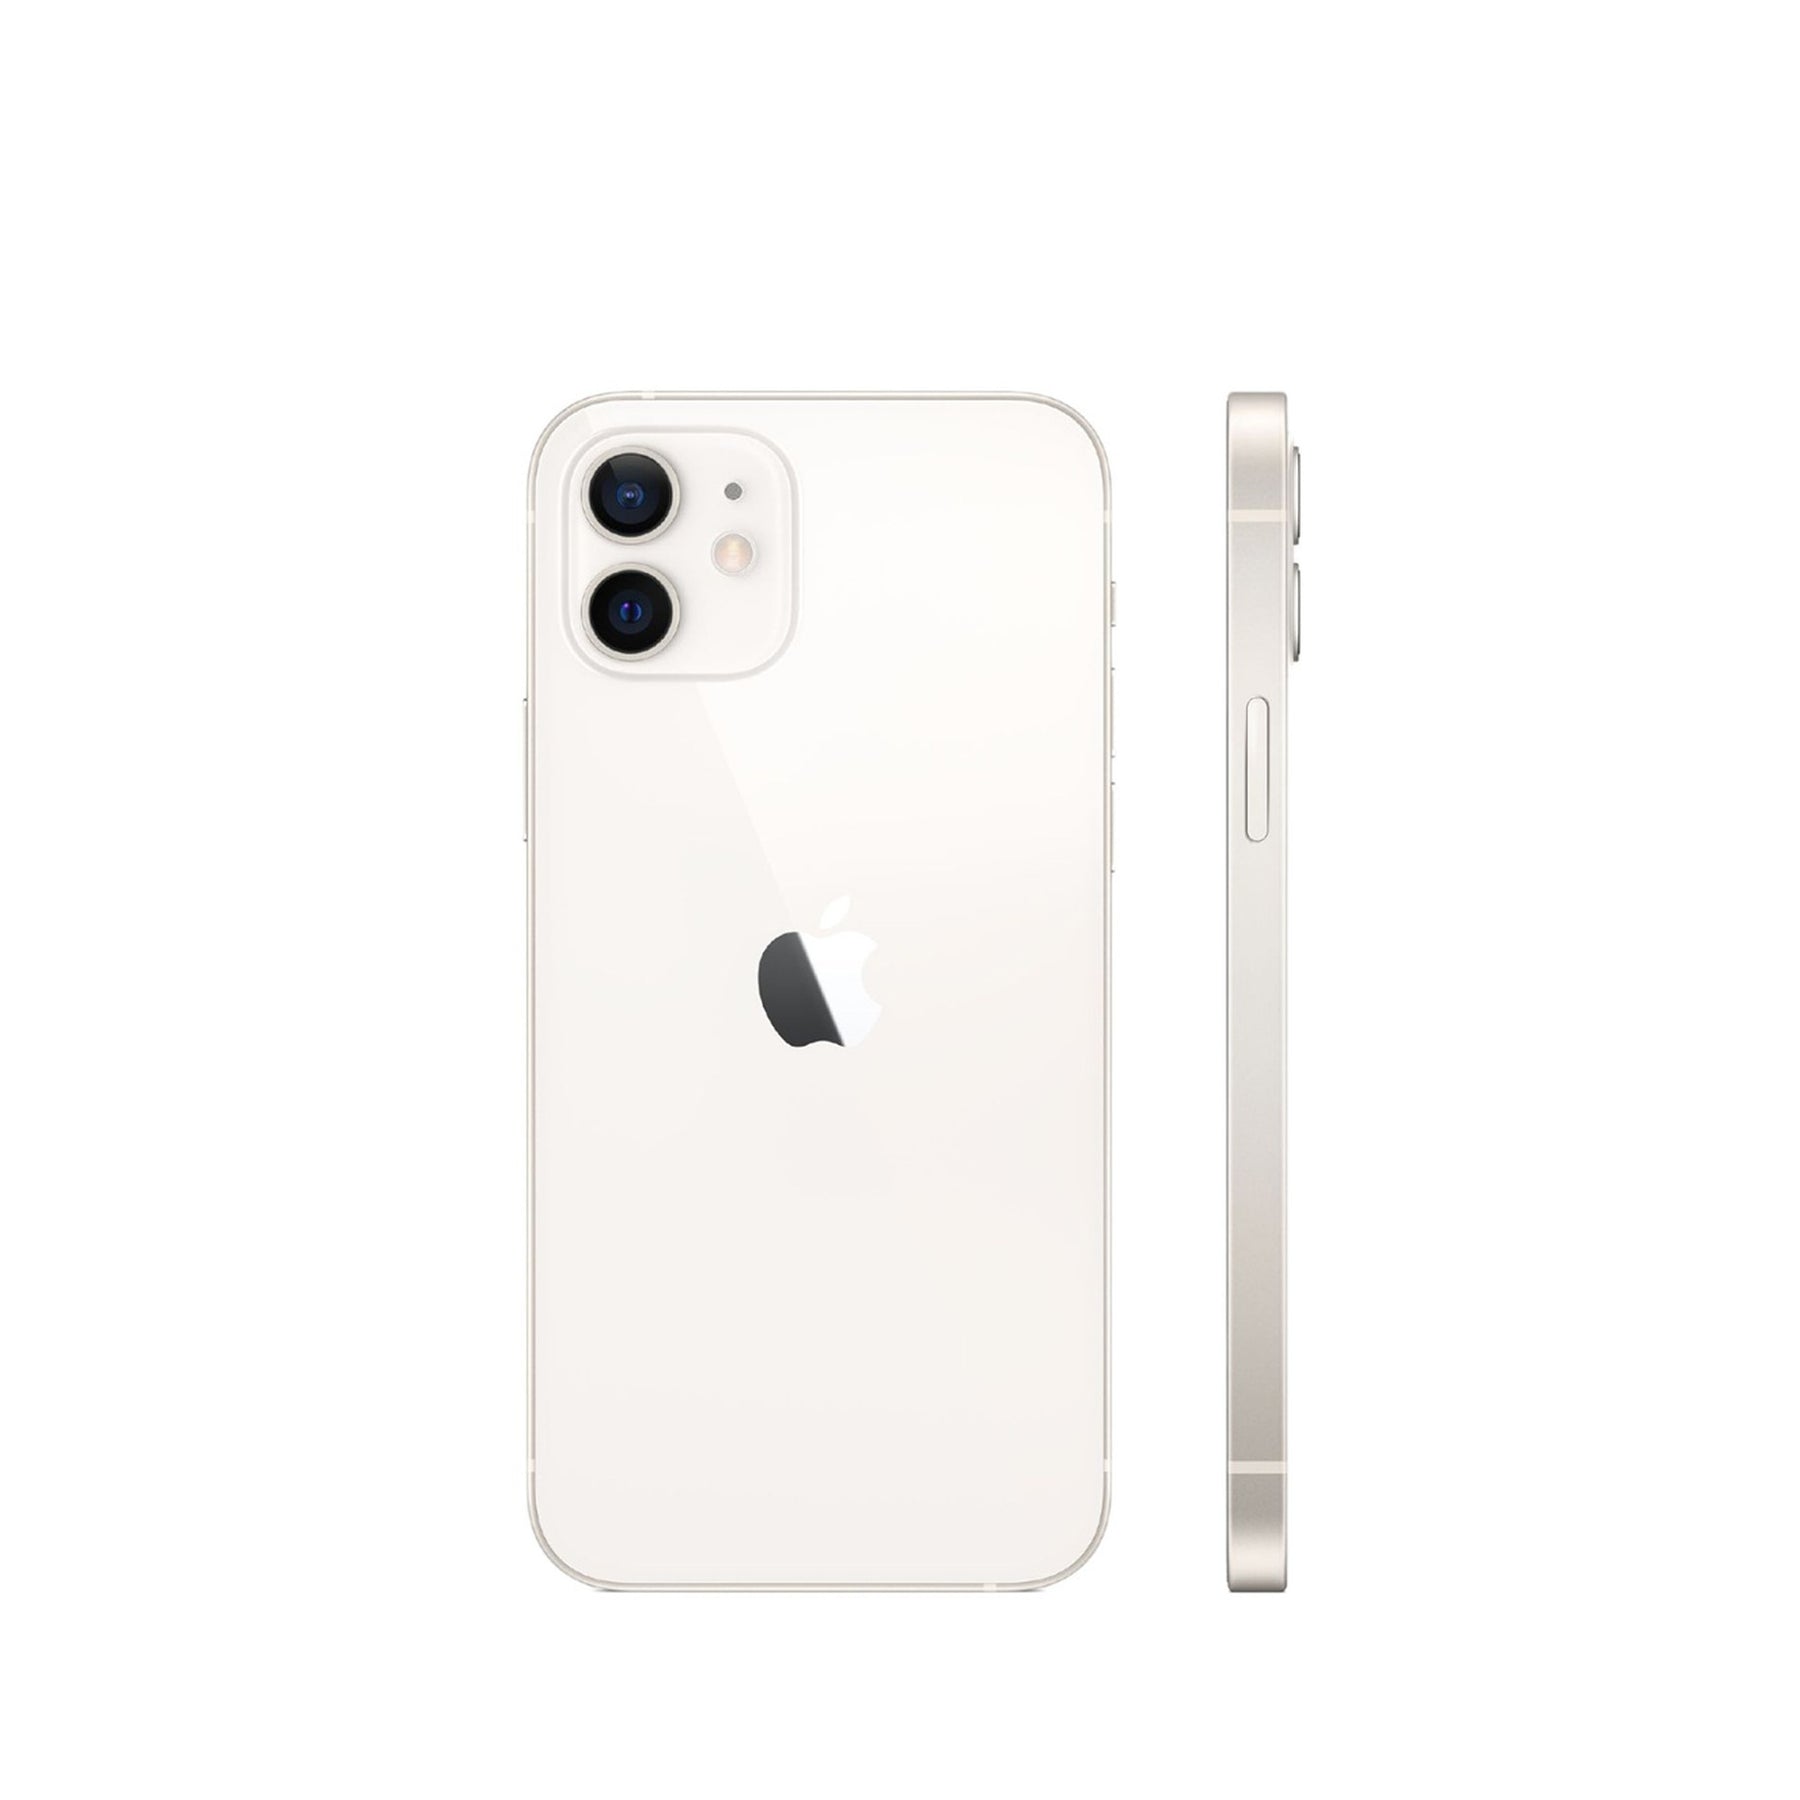 iPhone 12 Mini - White